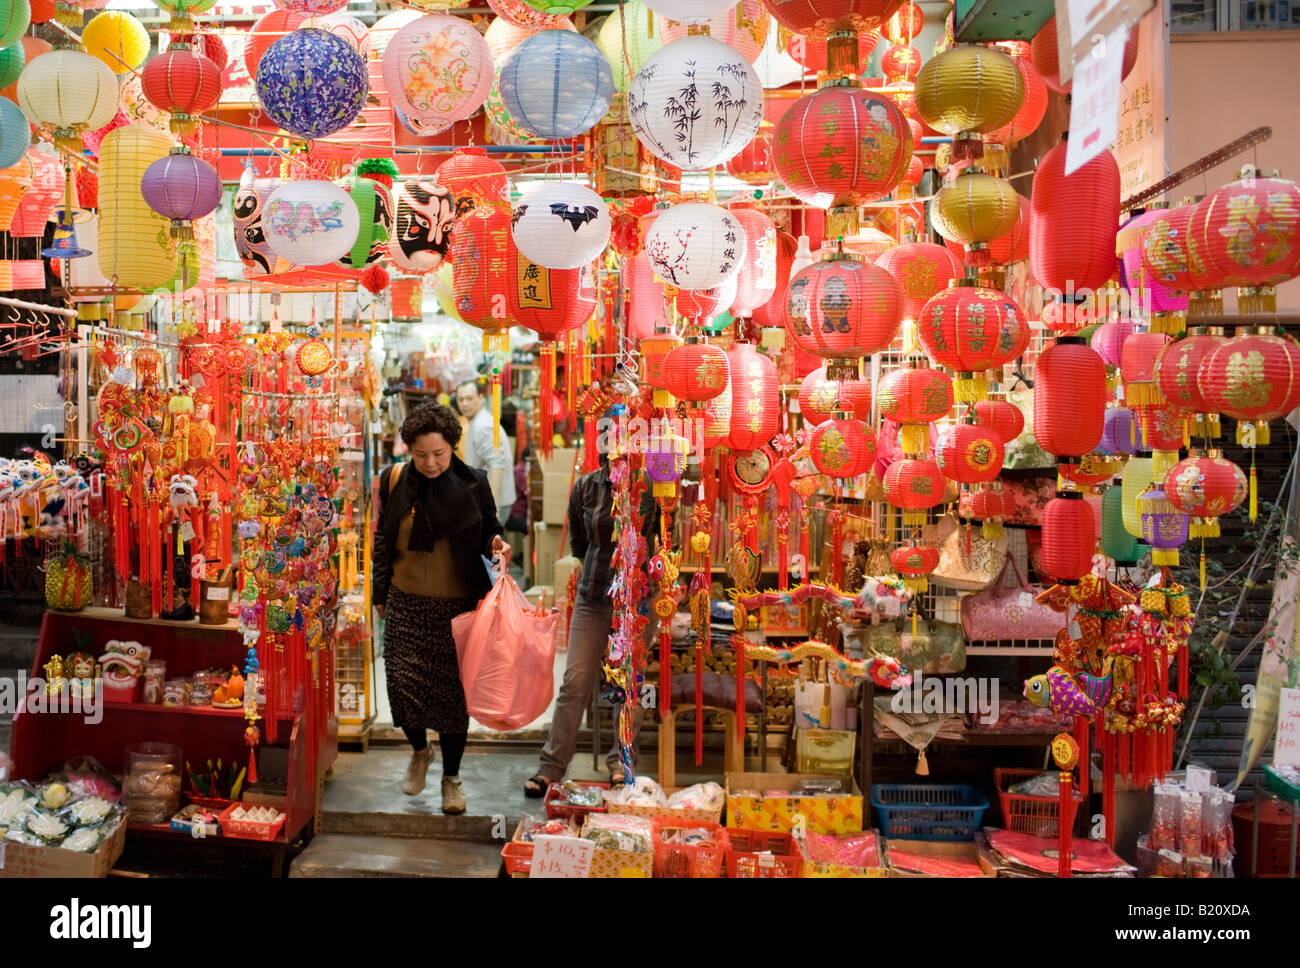 Lanterns ornaments and souvenirs on sale in traditional Graham Street market Sheung Wan Hong Kong China Stock Photo